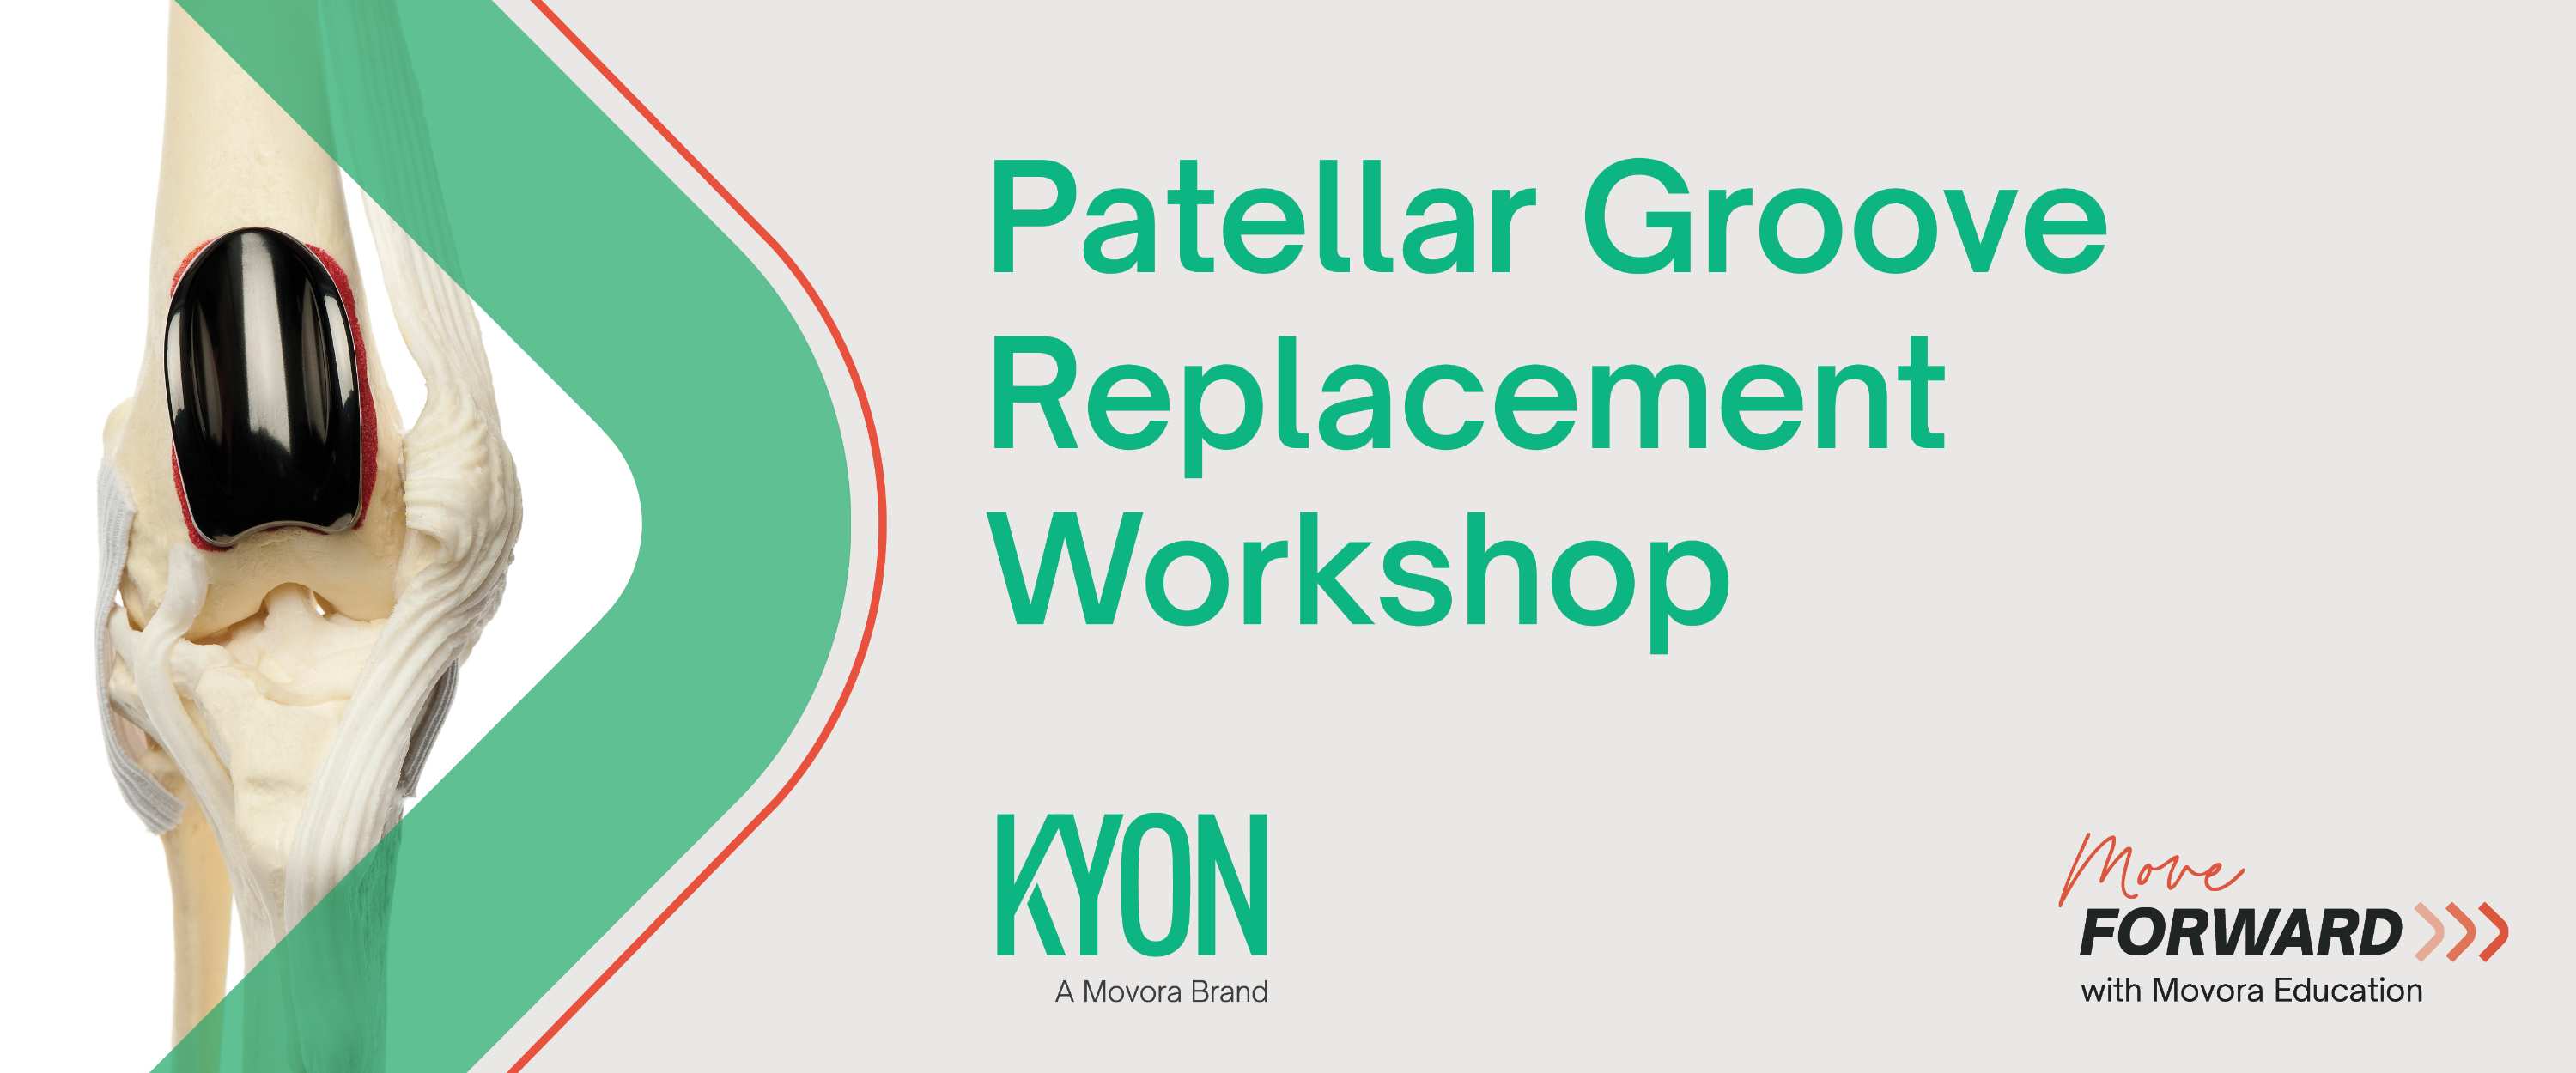 KYON Patellar Groove Replacement banner